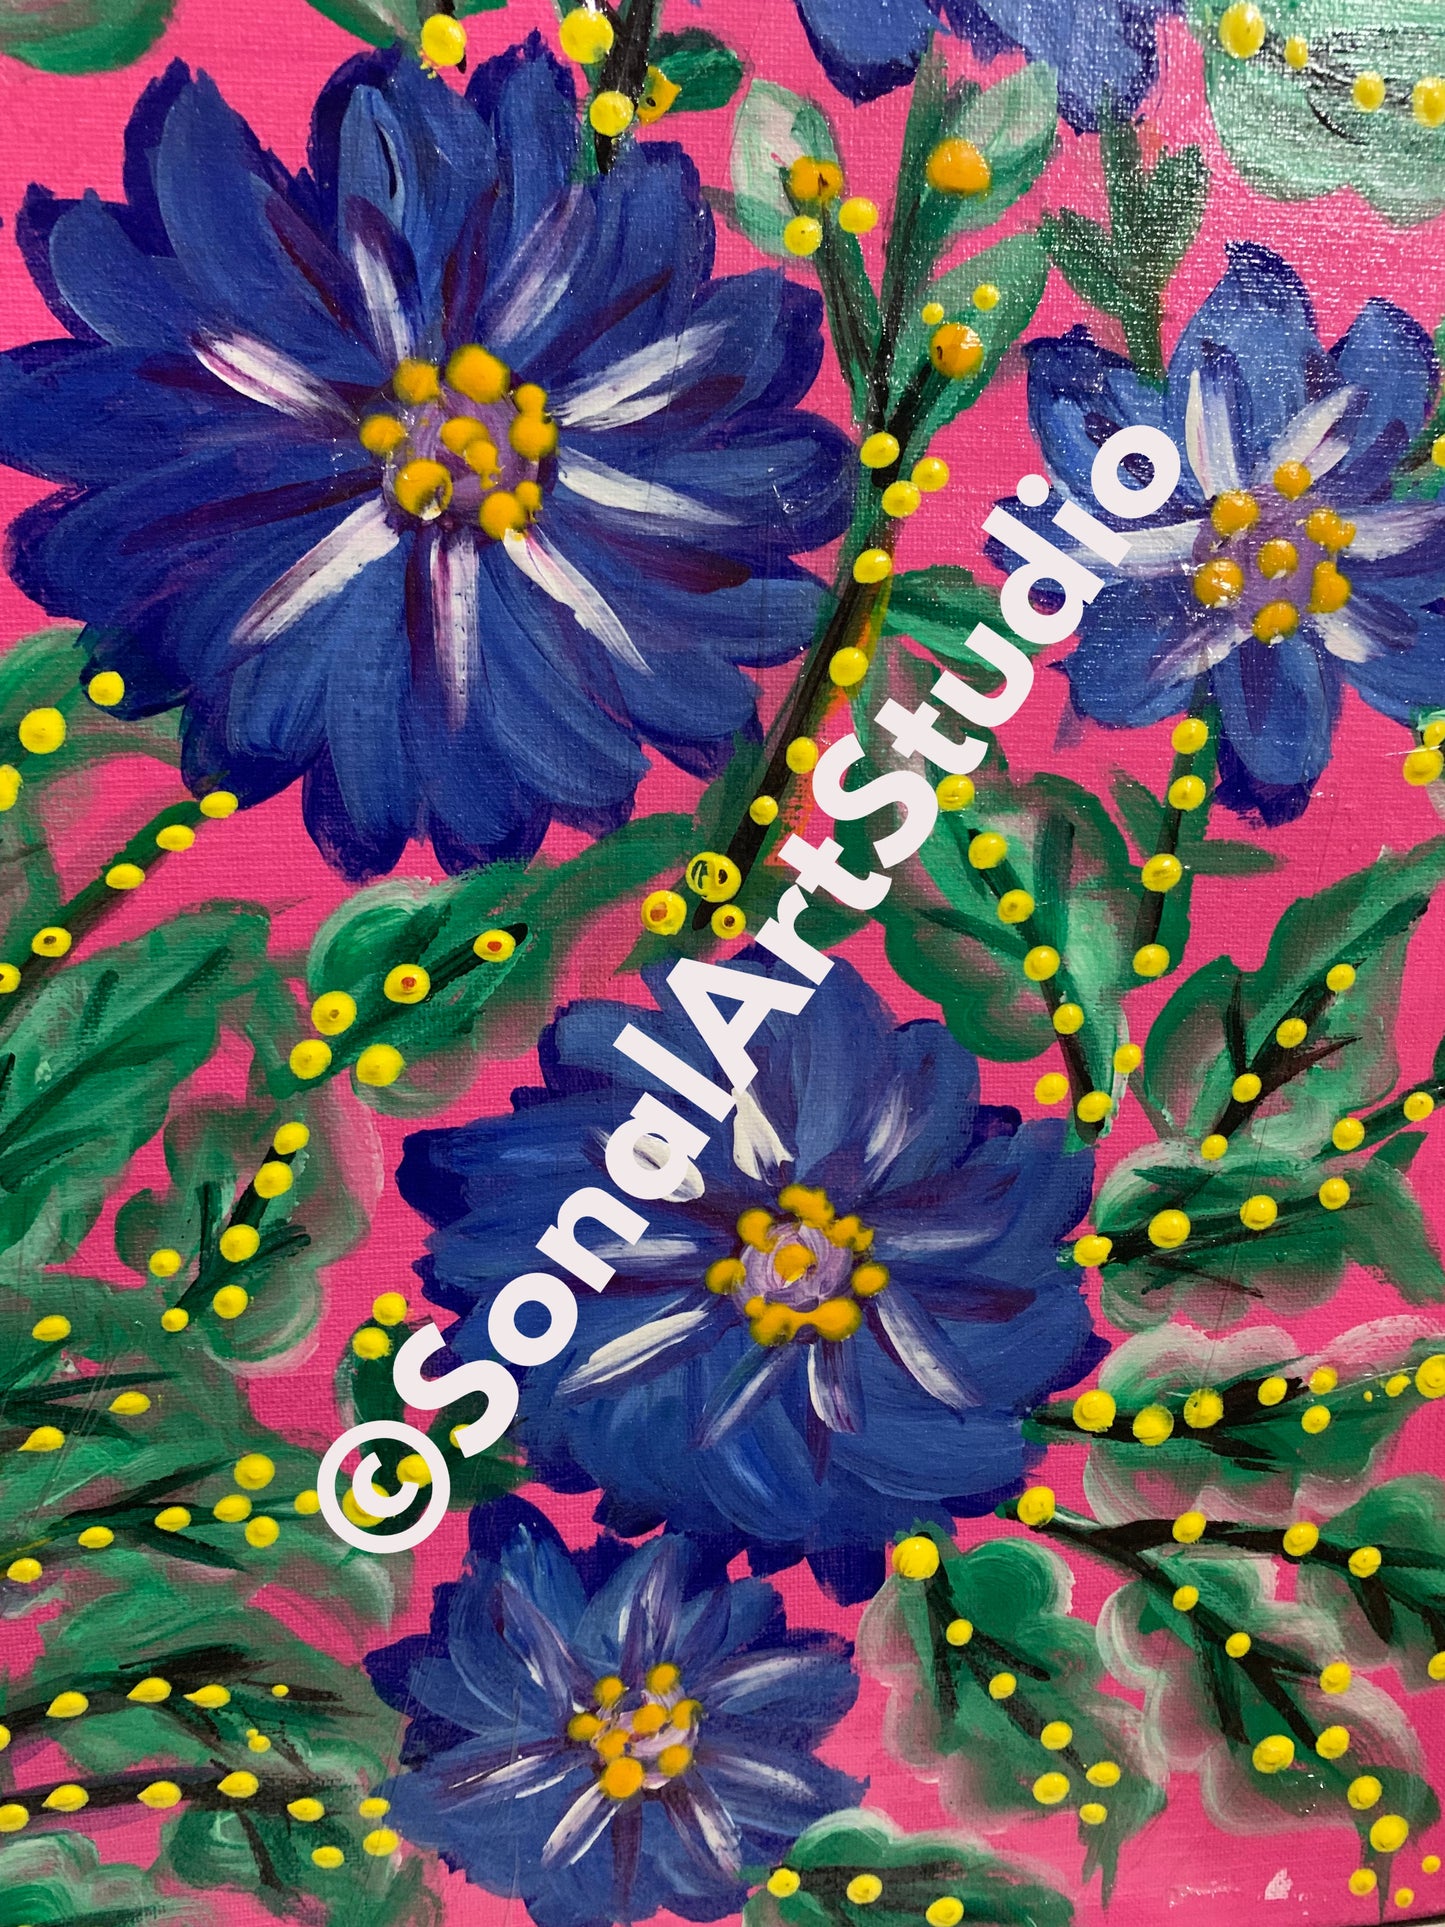 Blue Flowers Painting - SonalArtStudio